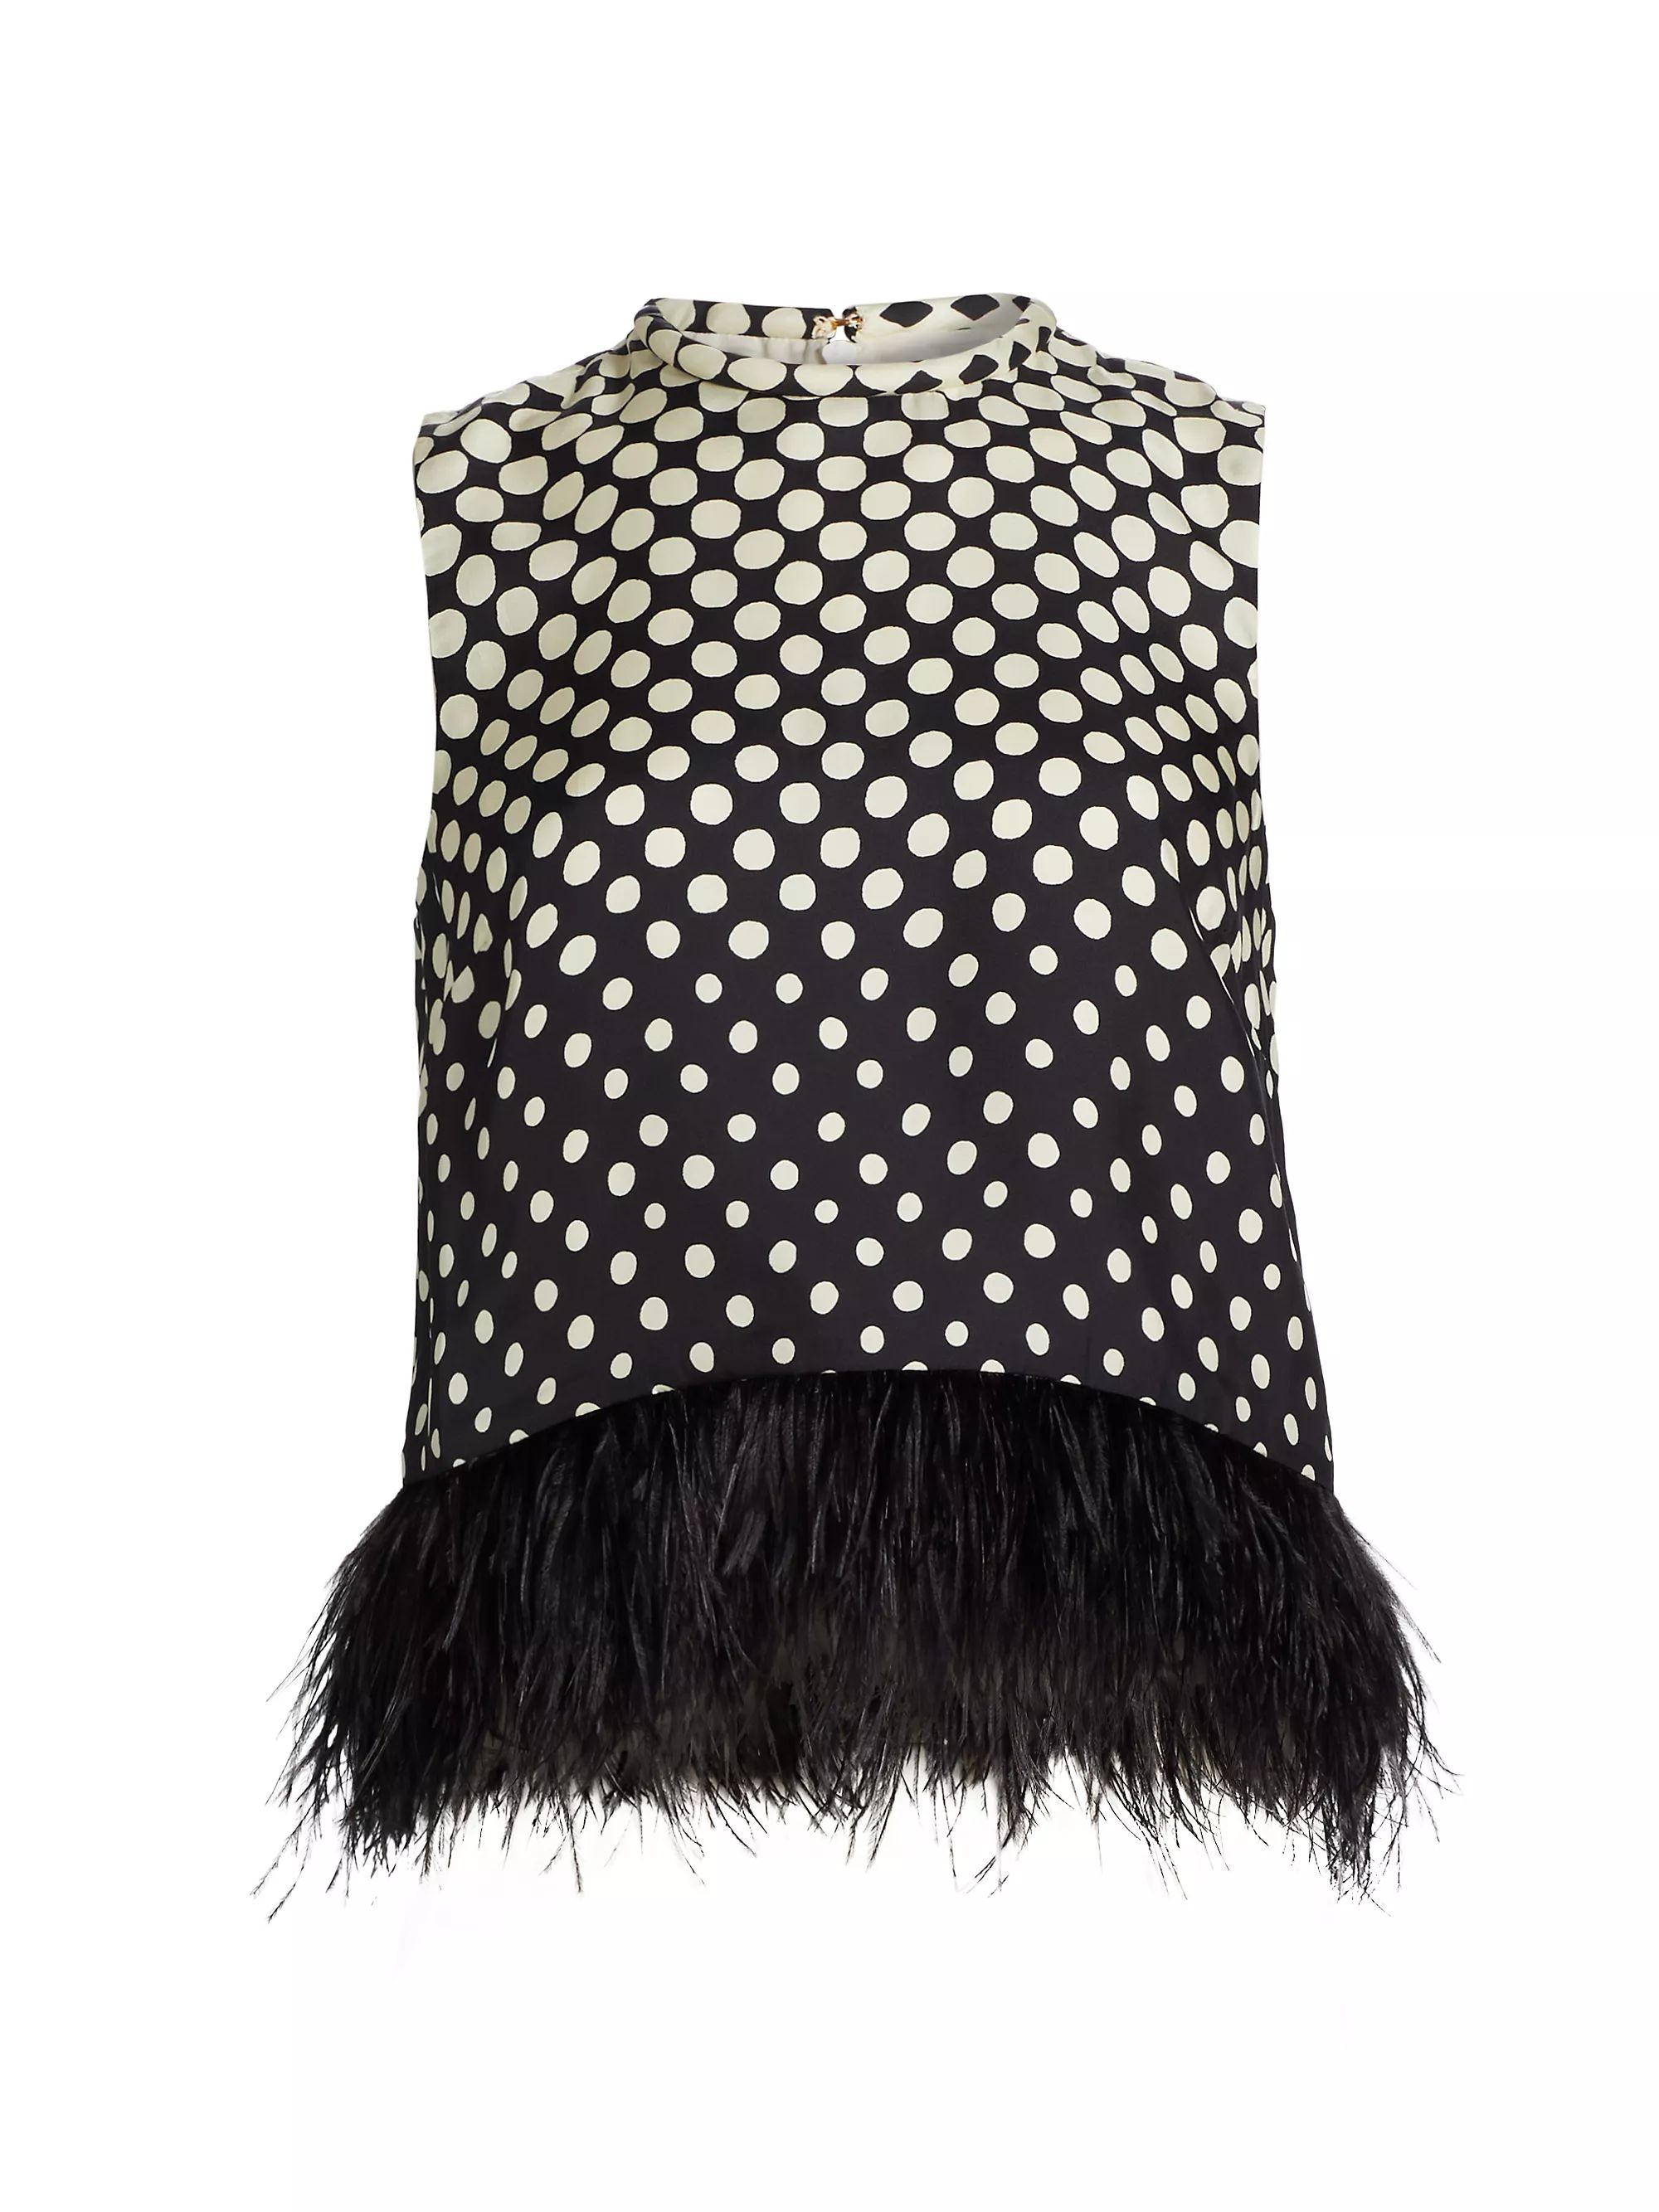 Shop Cara Cara Belmond Gradient Dot Top | Saks Fifth Avenue | Saks Fifth Avenue